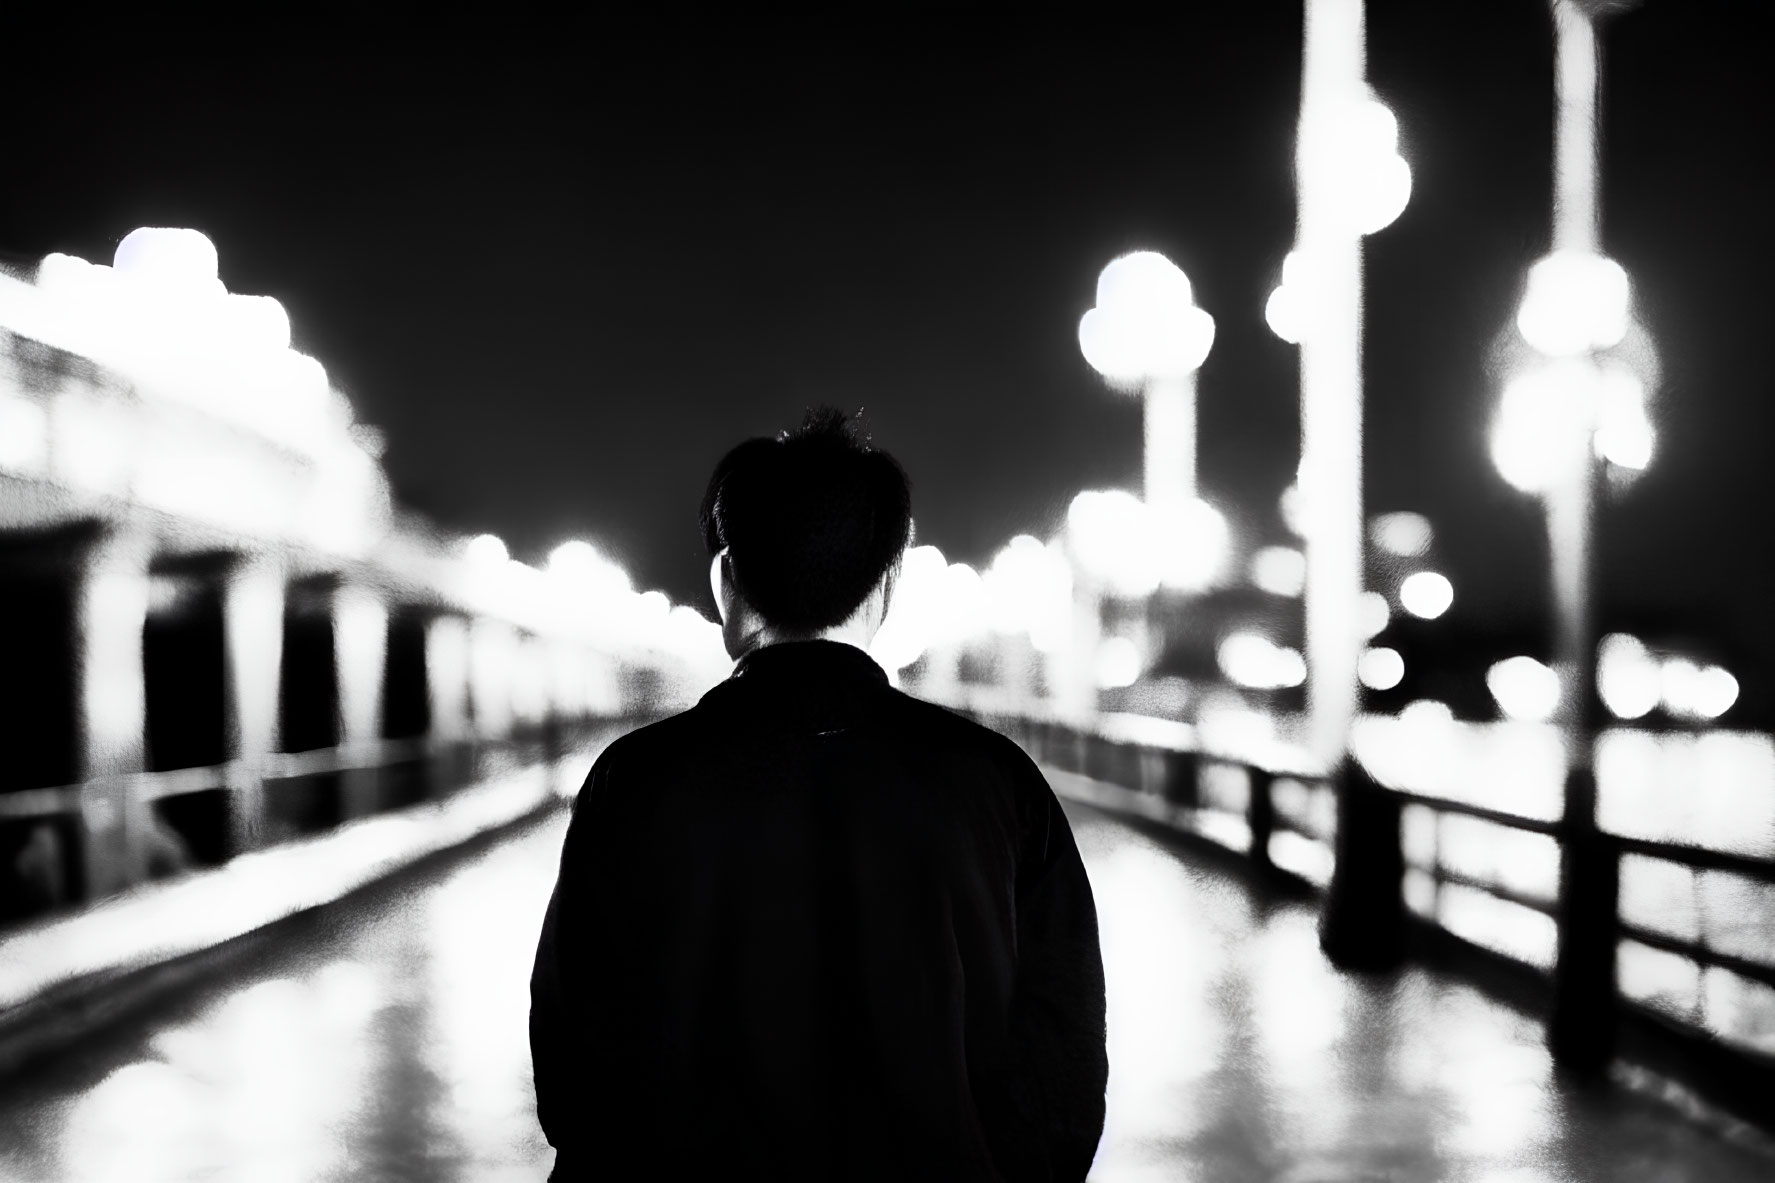 Monochrome image of person gazing at brightly lit bridge at night